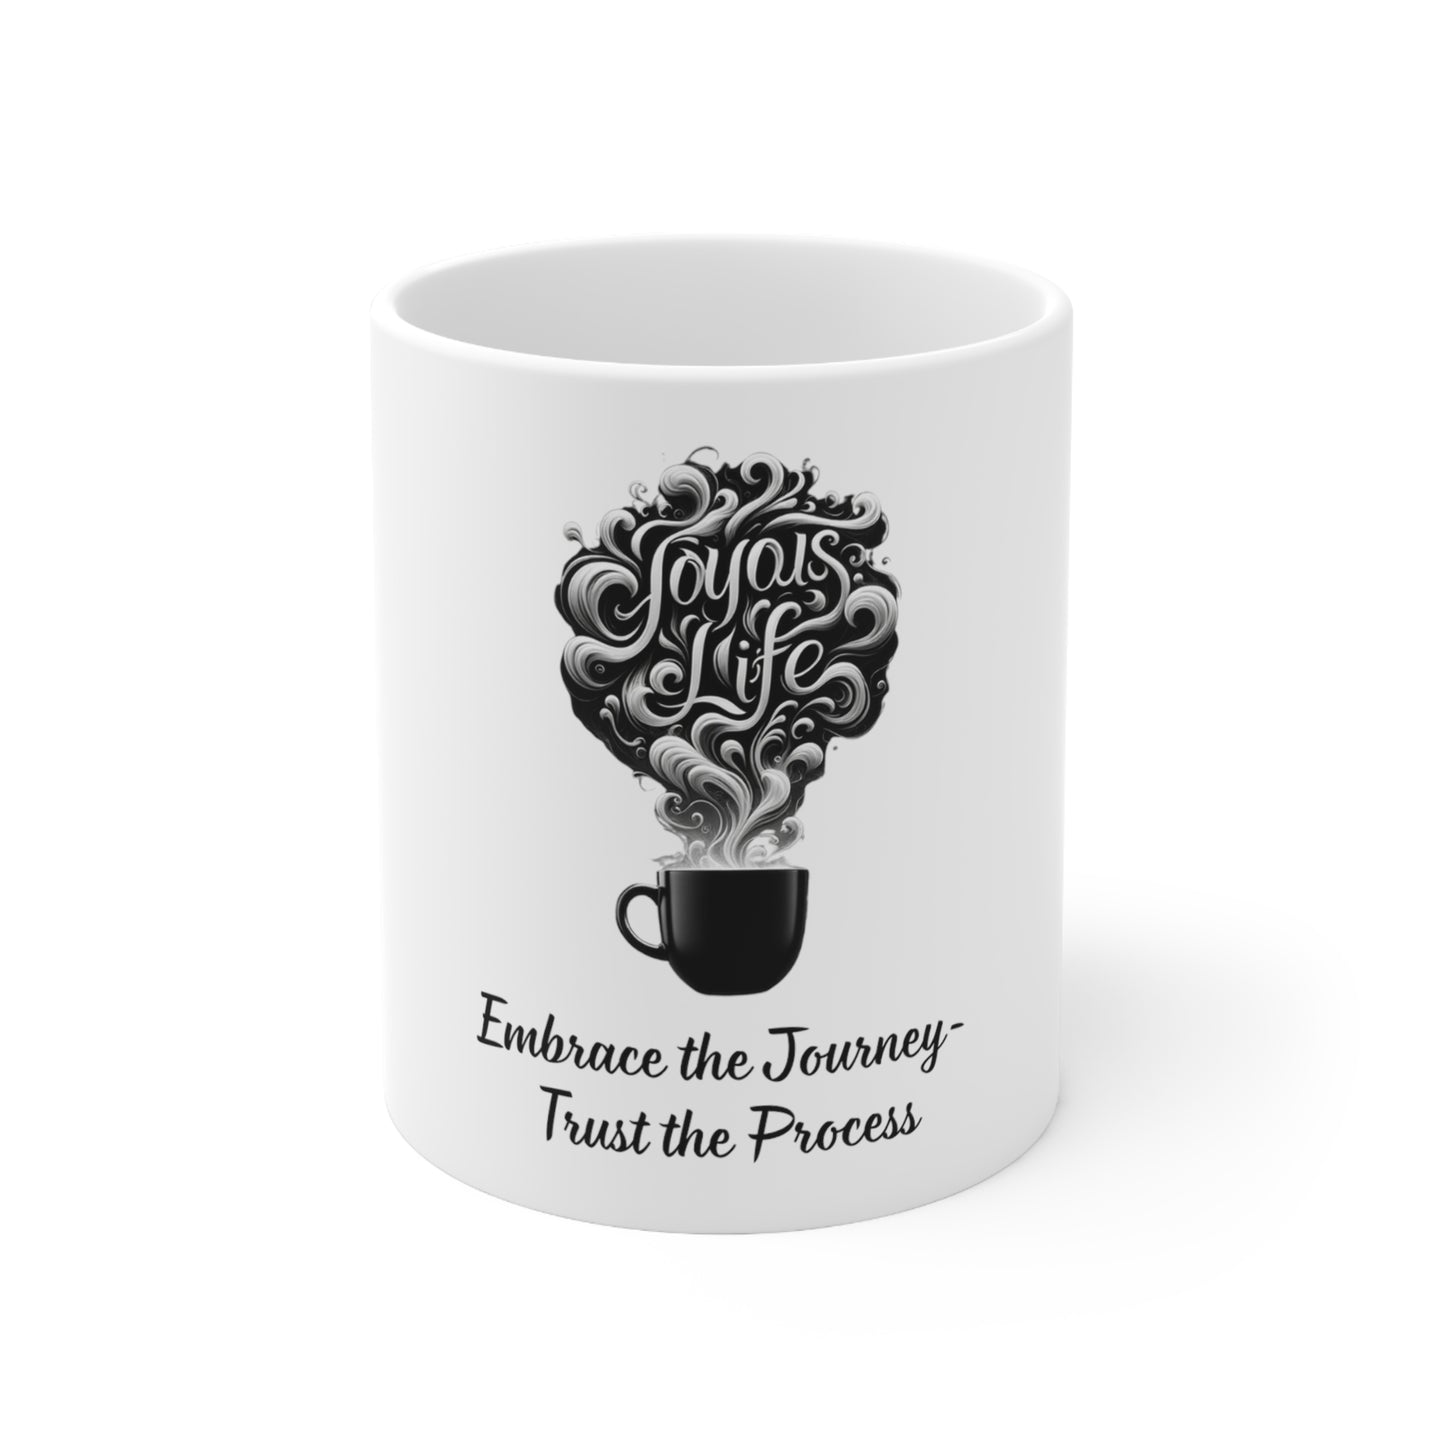 Embrace the Journey, Trust the Process - Motivational Ceramic Mug 11oz, Joyous Life Journals